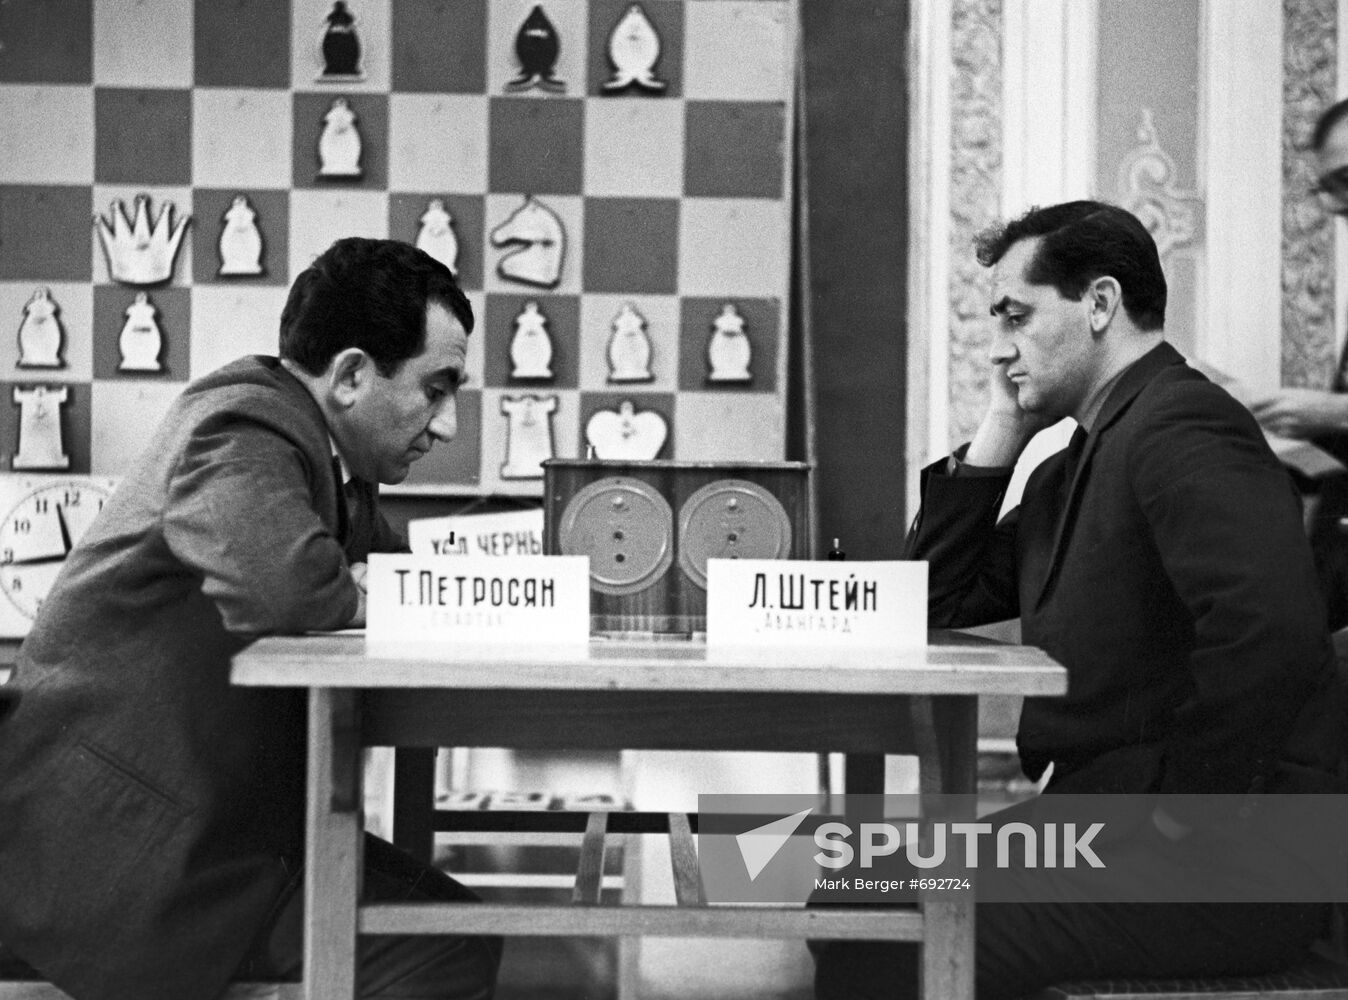 Tigran Petrosian and Leonid Shteyn